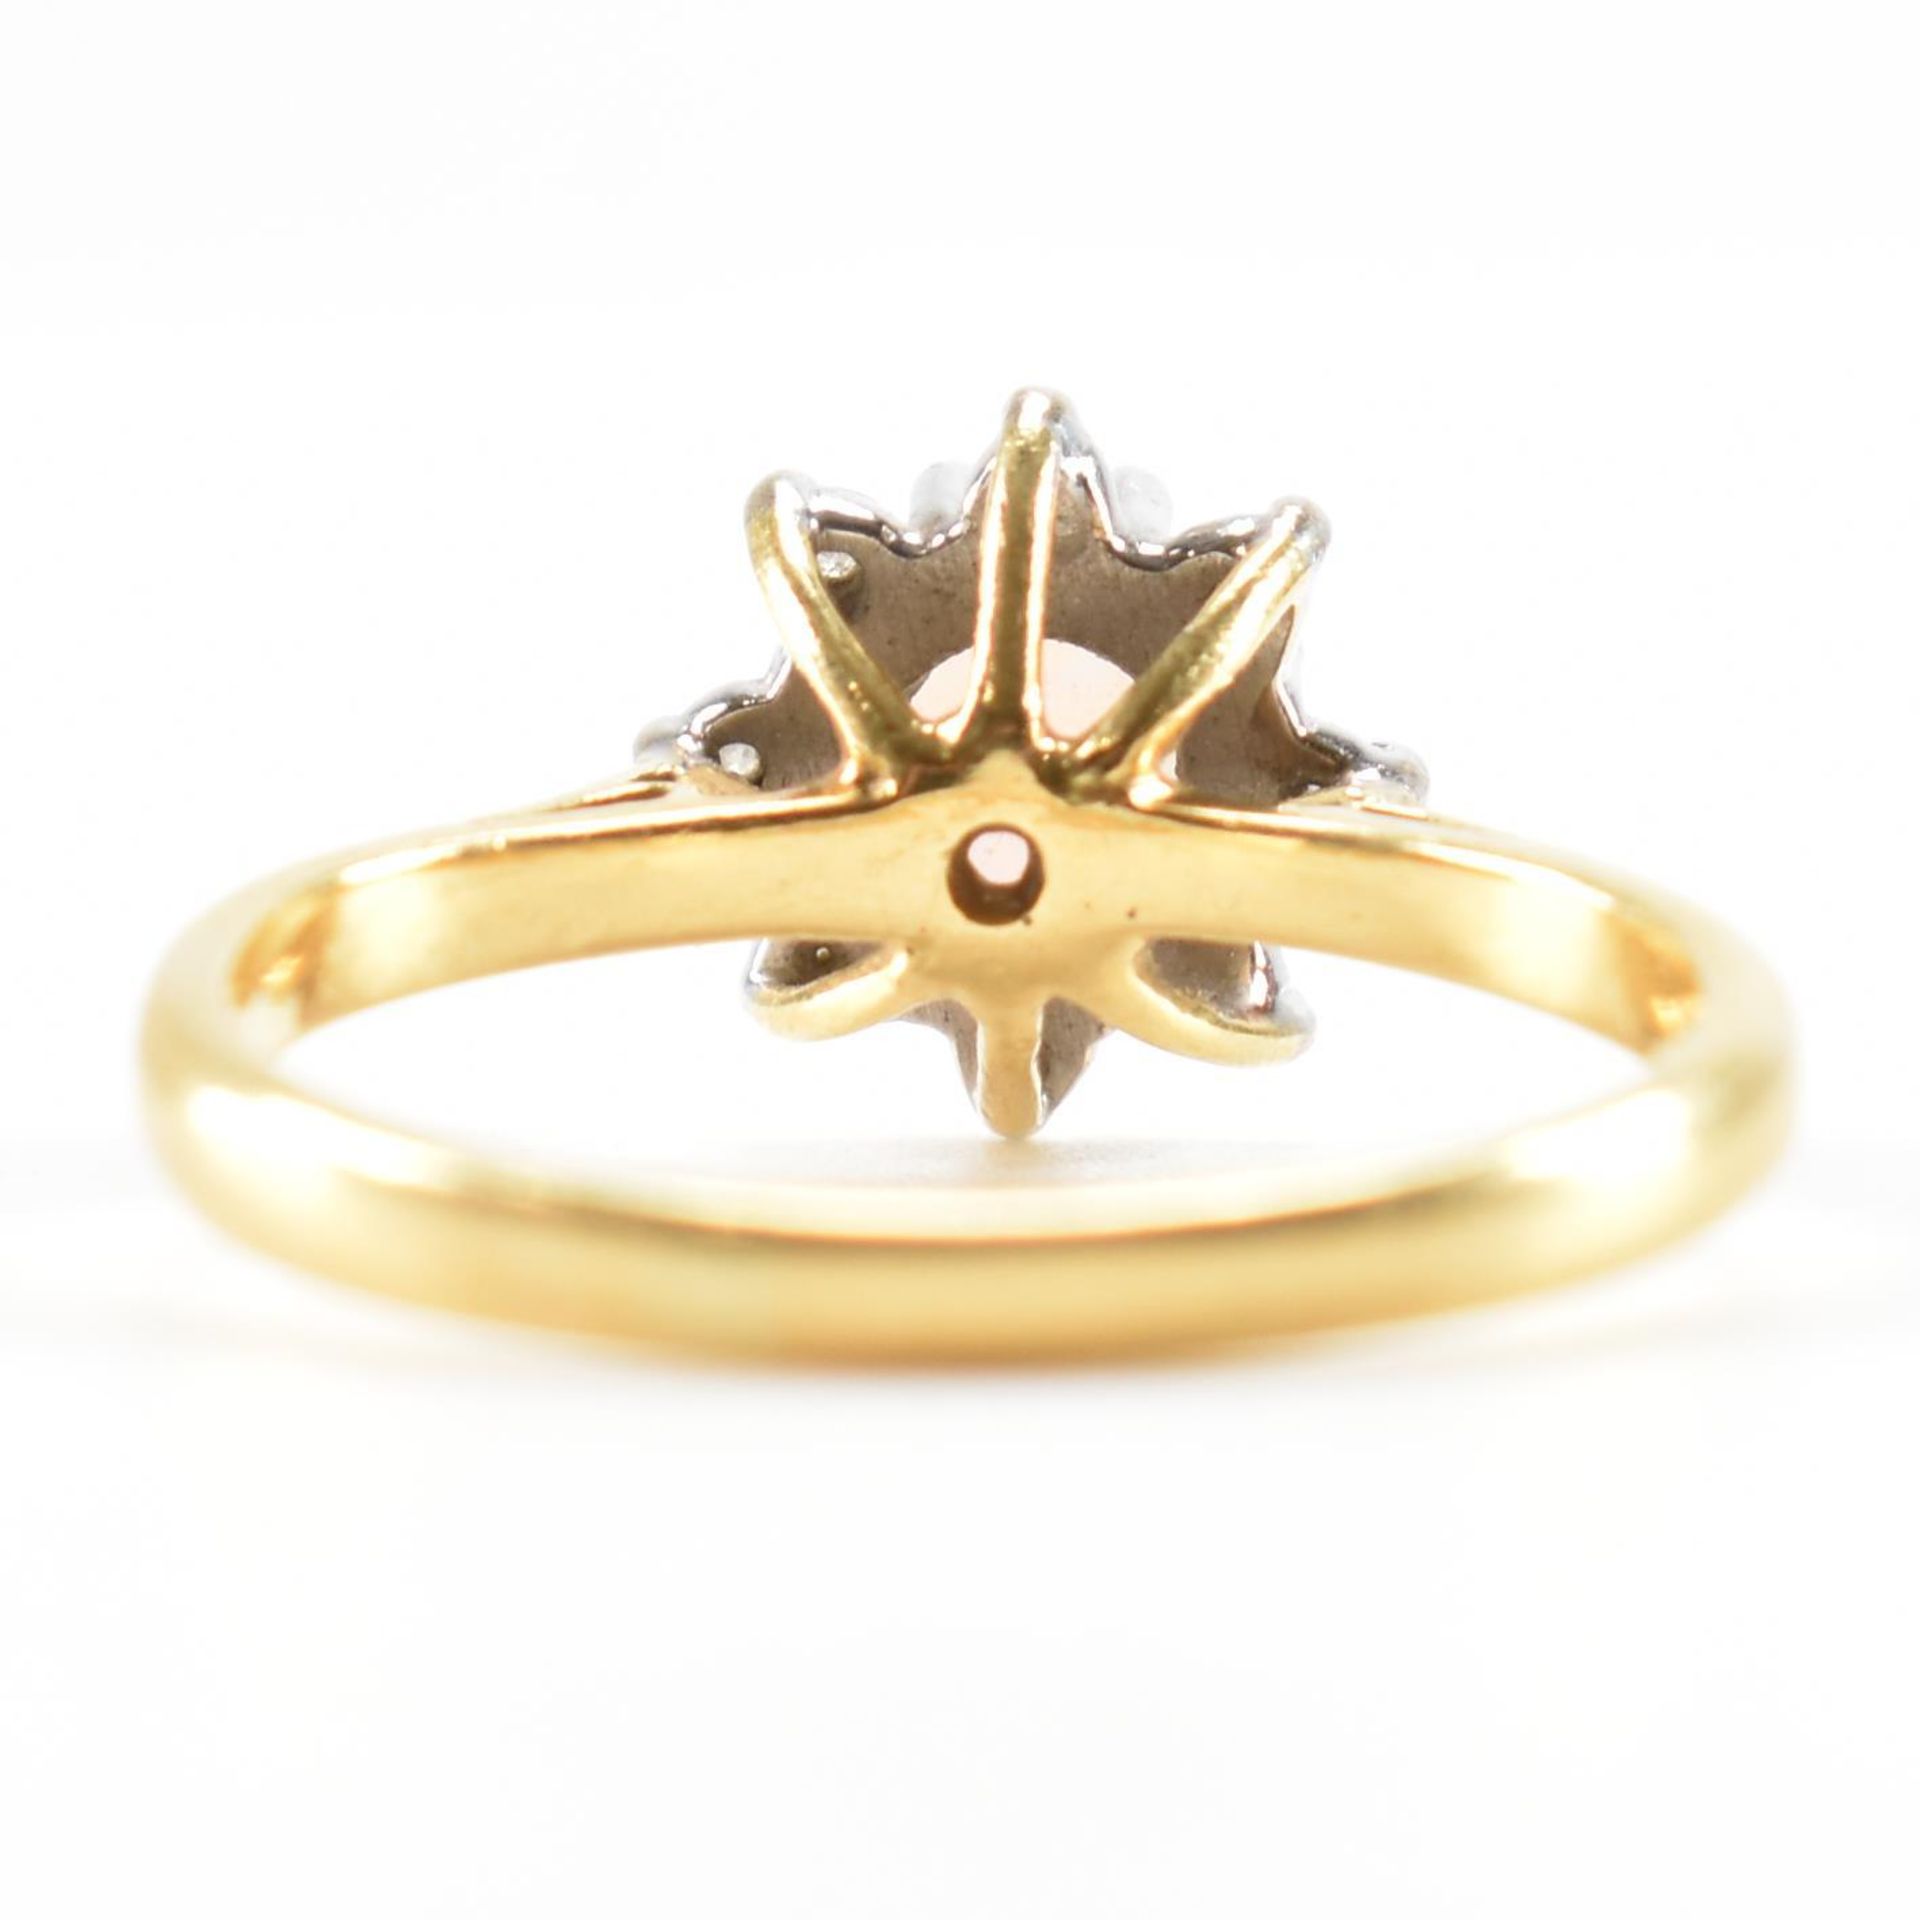 HALLMARKED 18CT GOLD OPAL & DIAMOND RING - Image 4 of 8